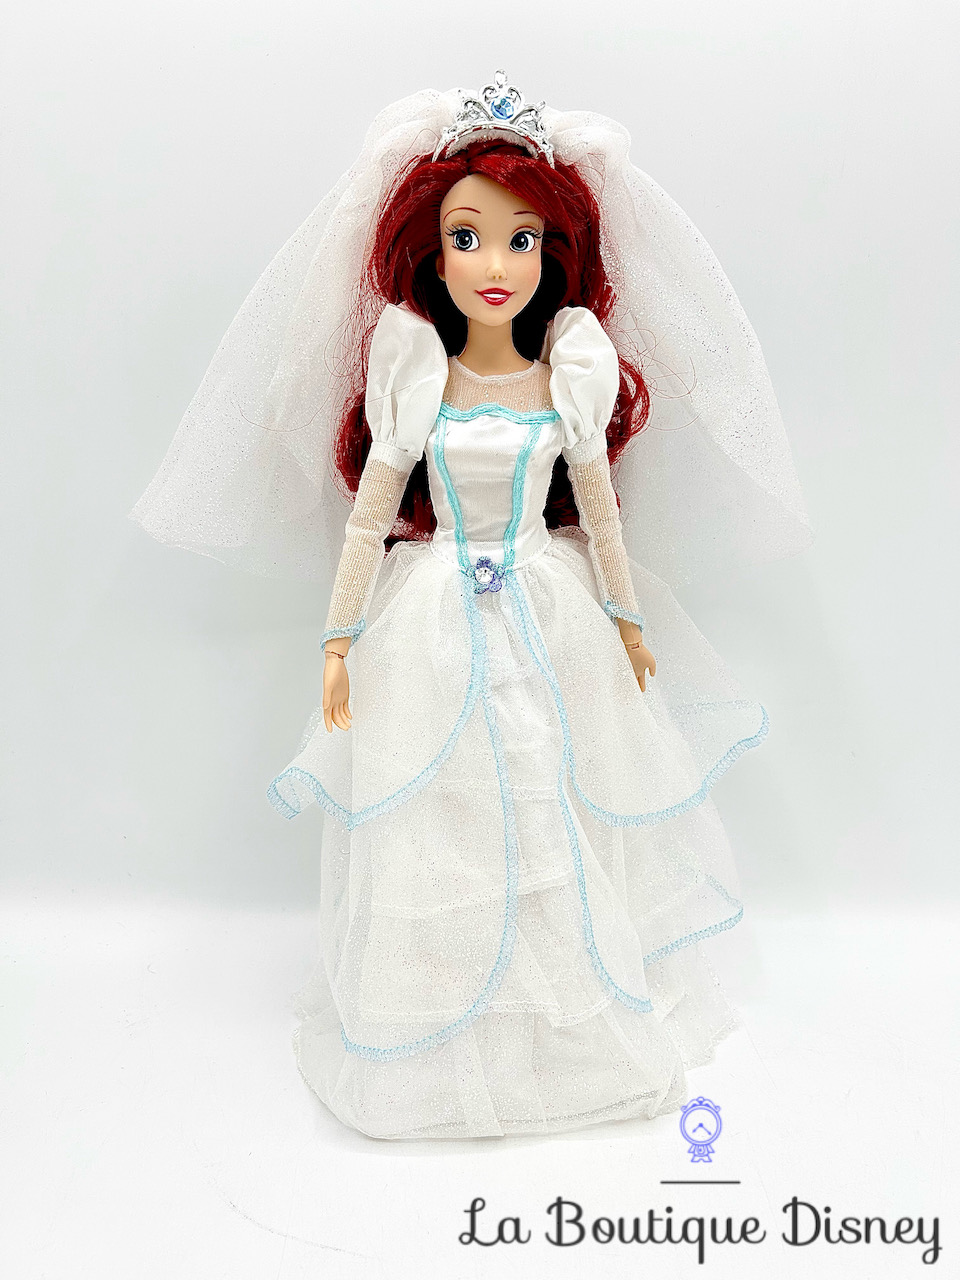 Poupée Ariel mariée La petite sirène Disneyland Paris 2018 Disney mariage